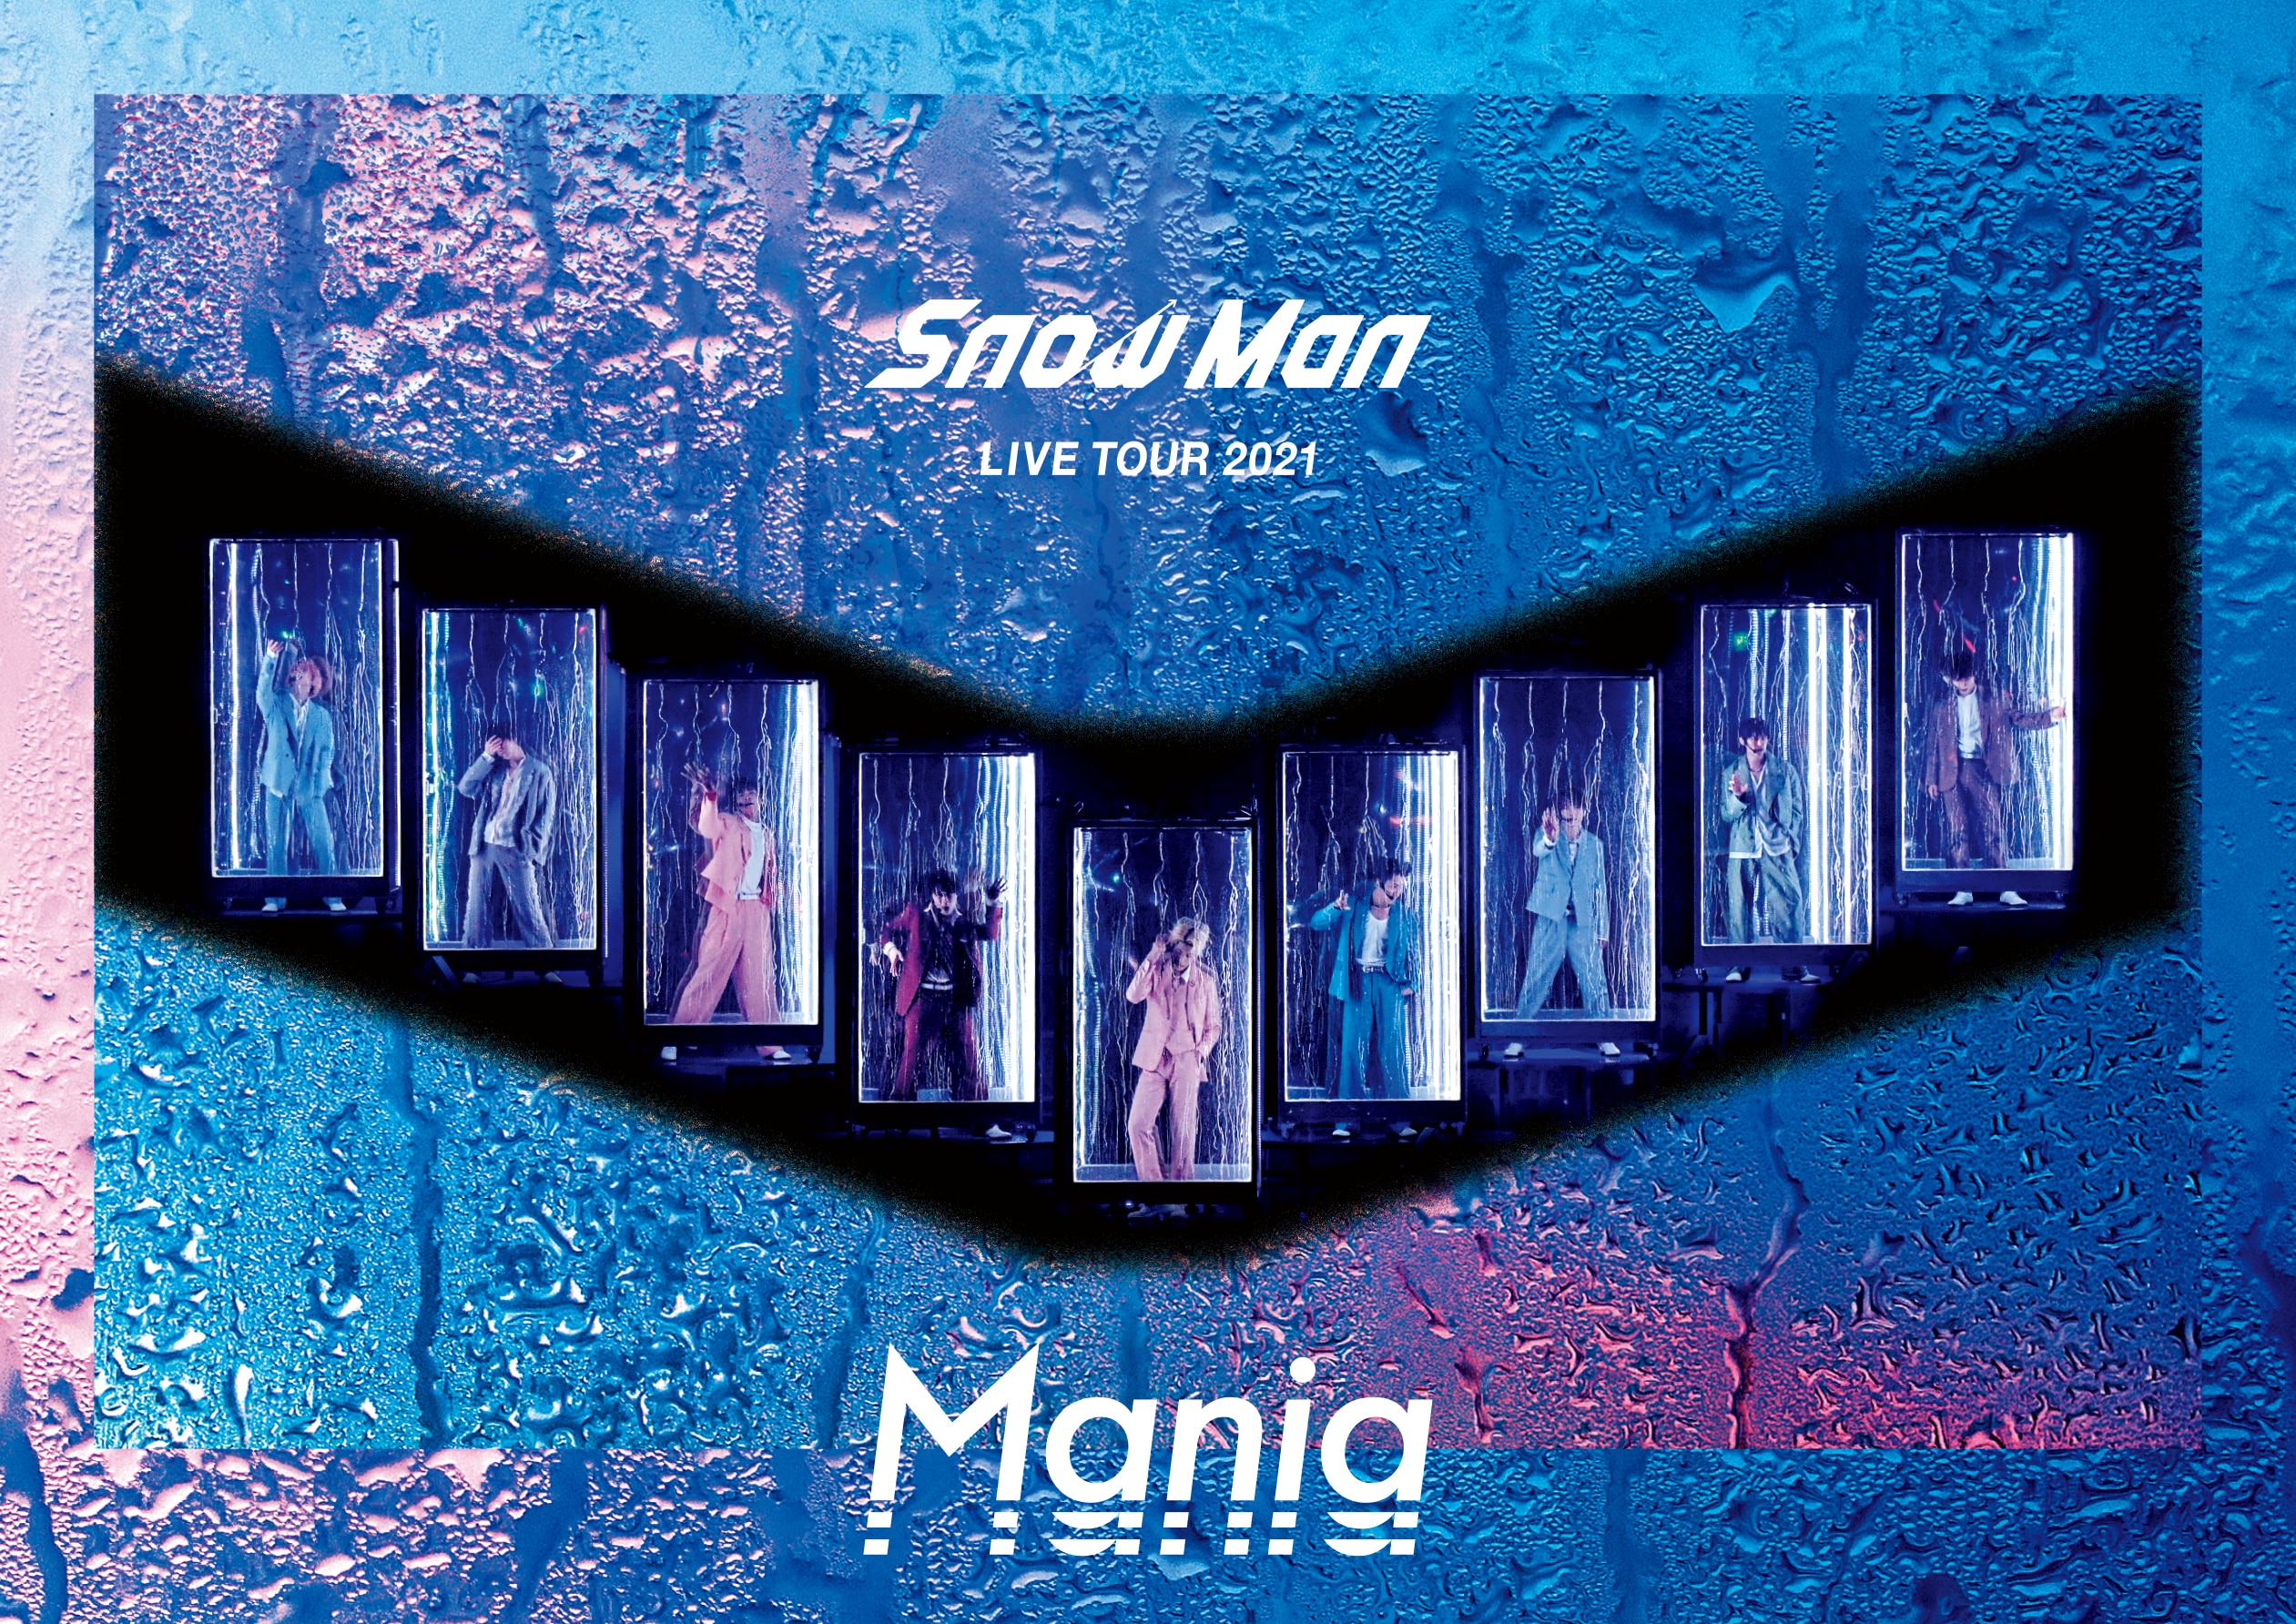 年中無休】 Snow Man LIVE TOUR 2021 Mania 初回盤 drenriquejmariani.com